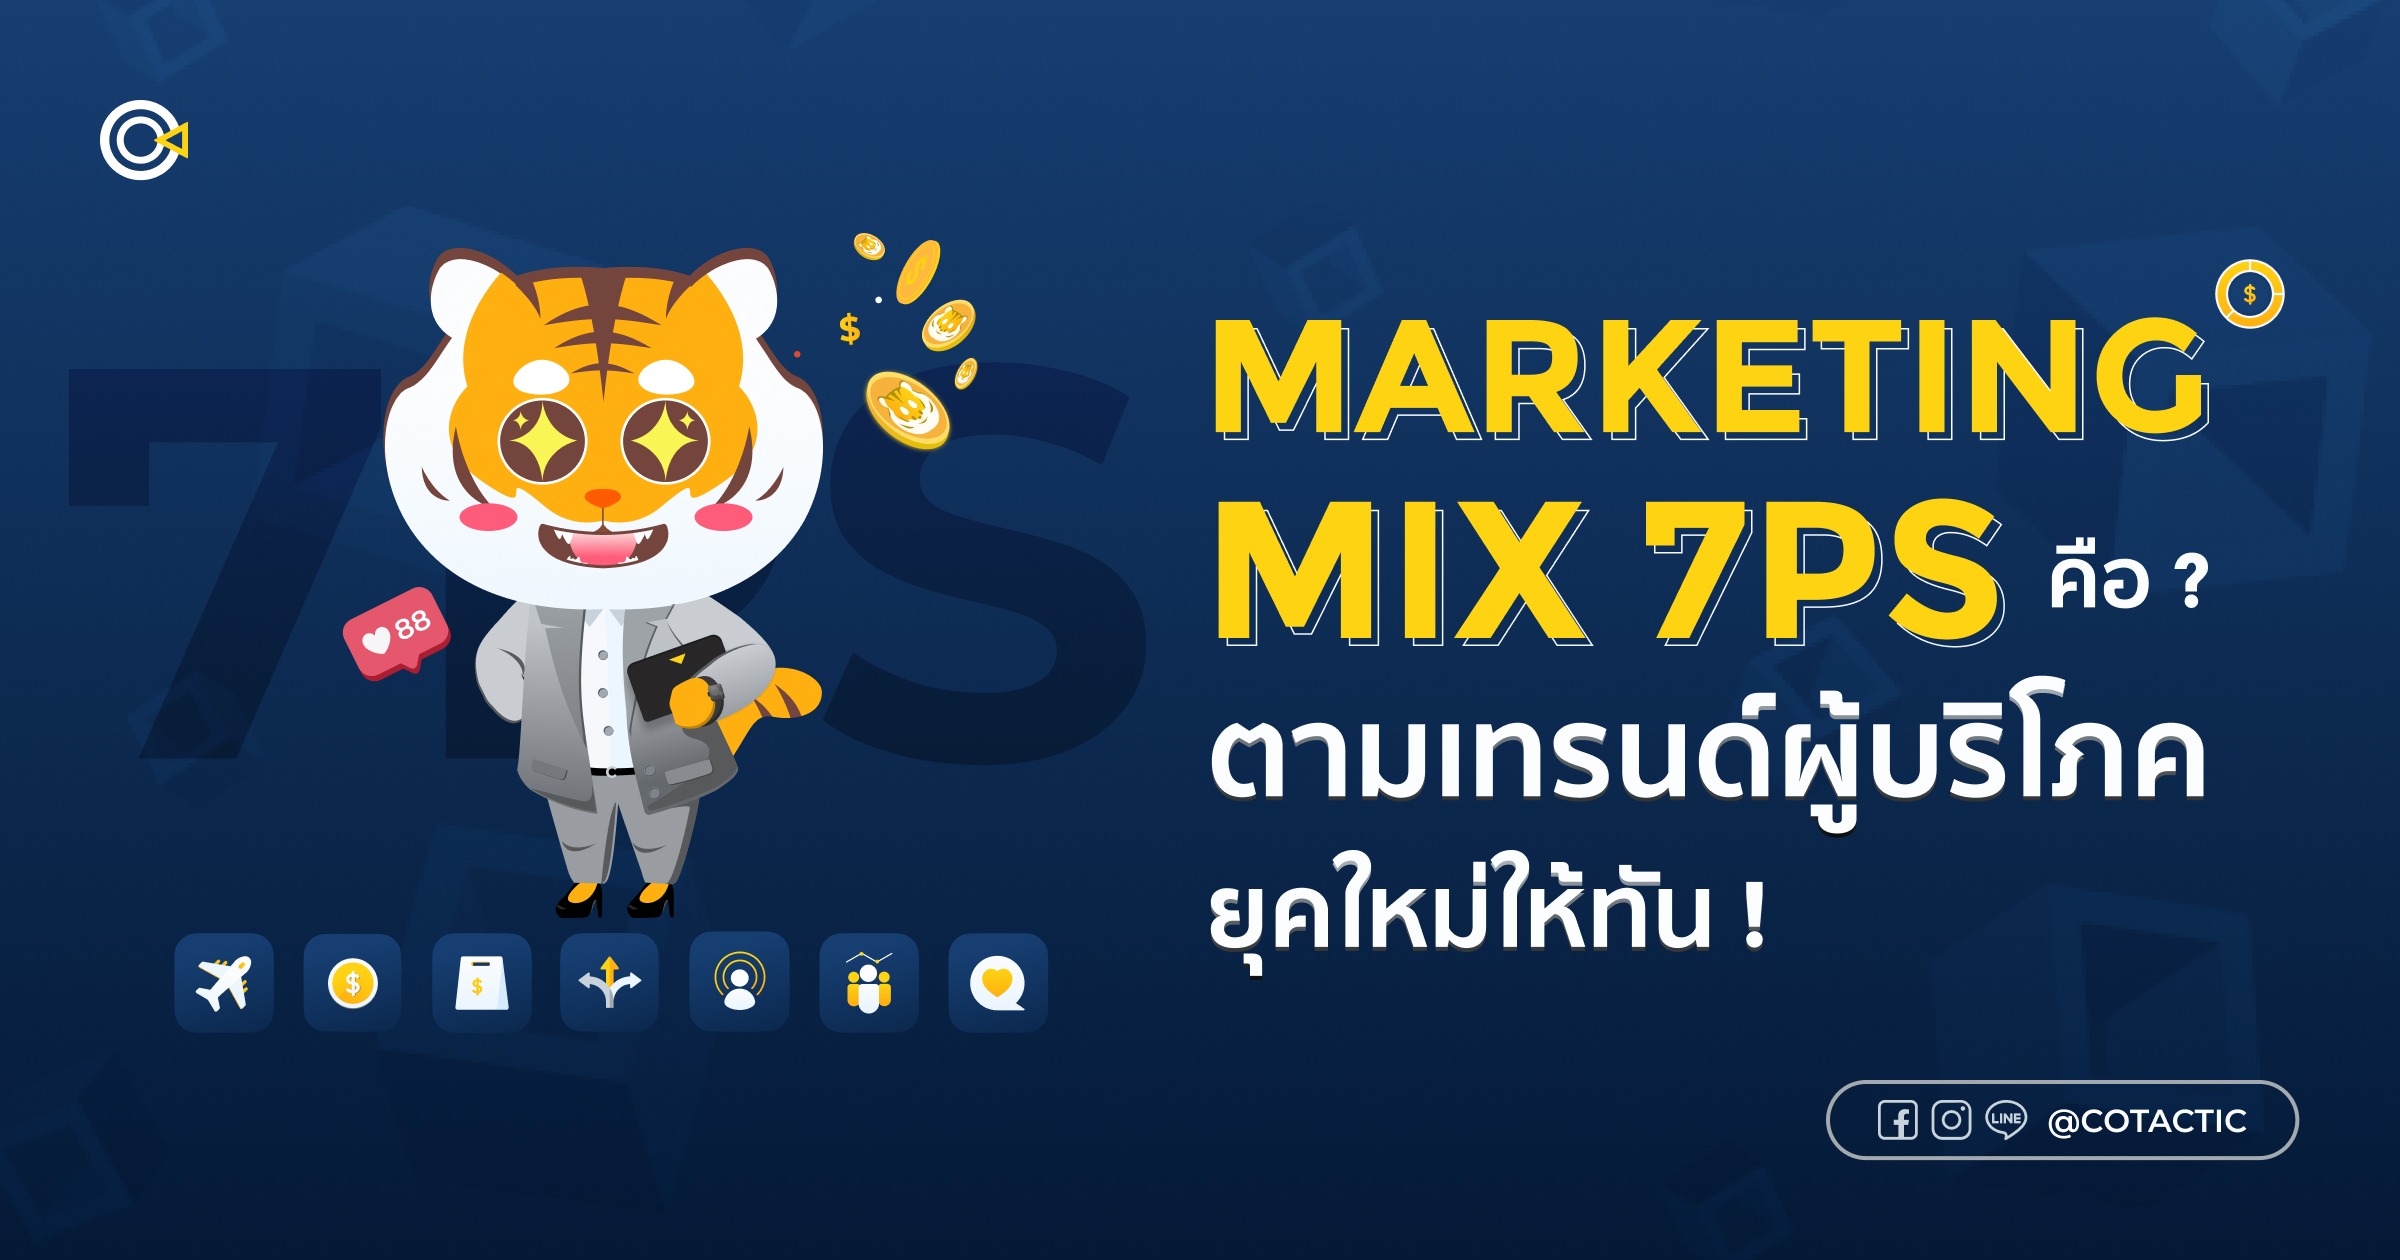 Marketing mix 7ps